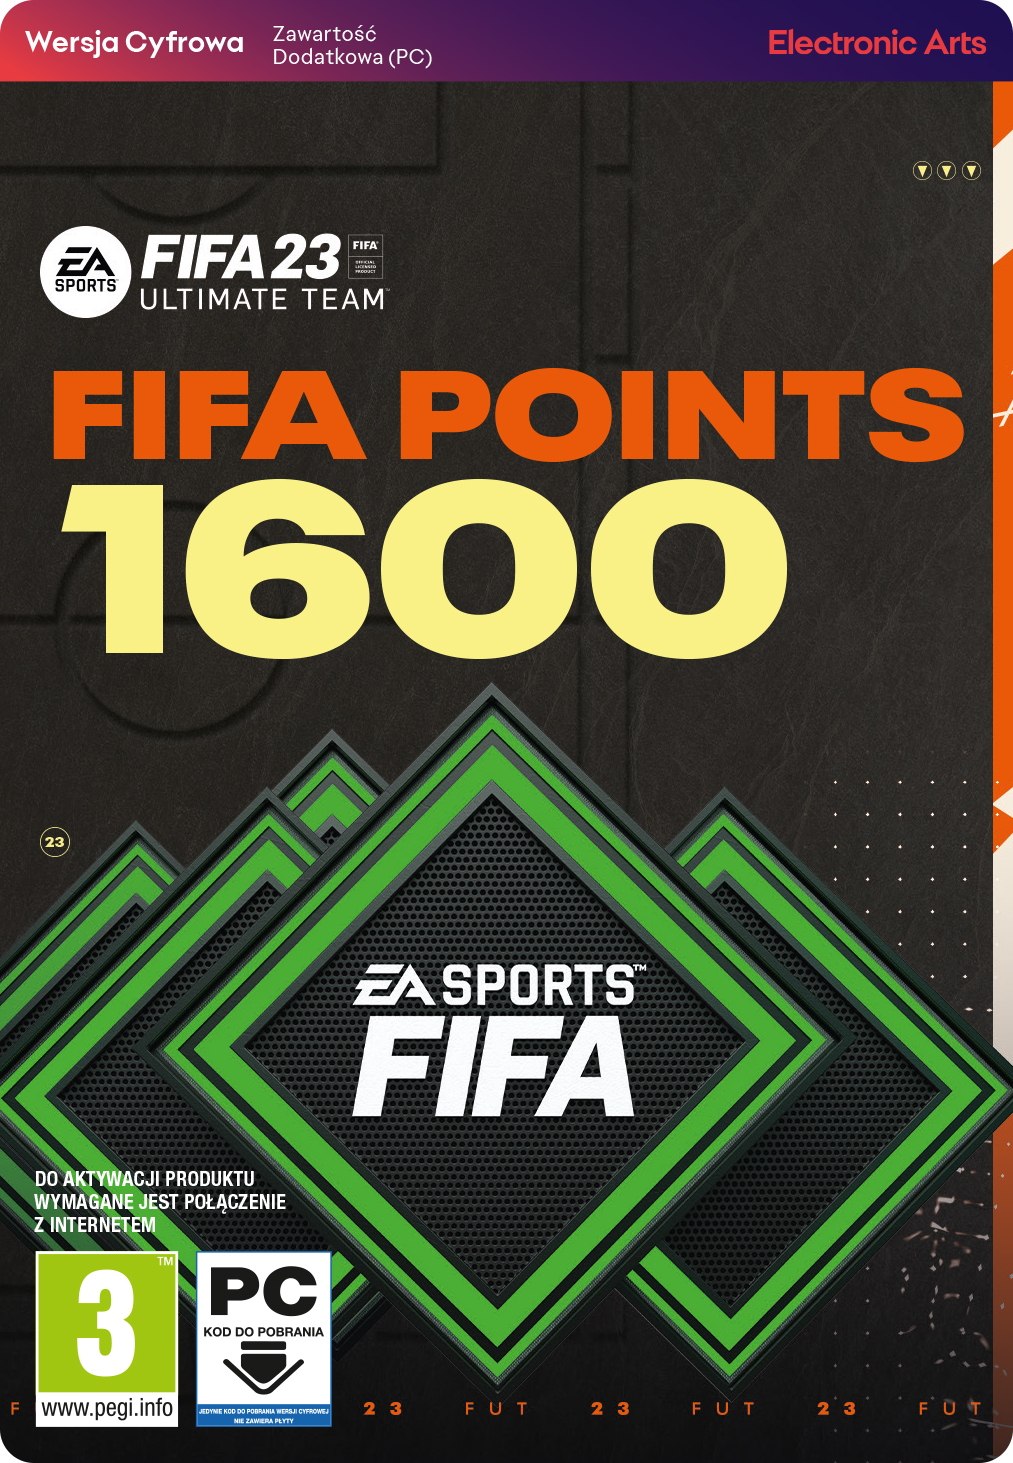 FIFA 23 ULTIMATE TEAM FIFA POINTS 1600